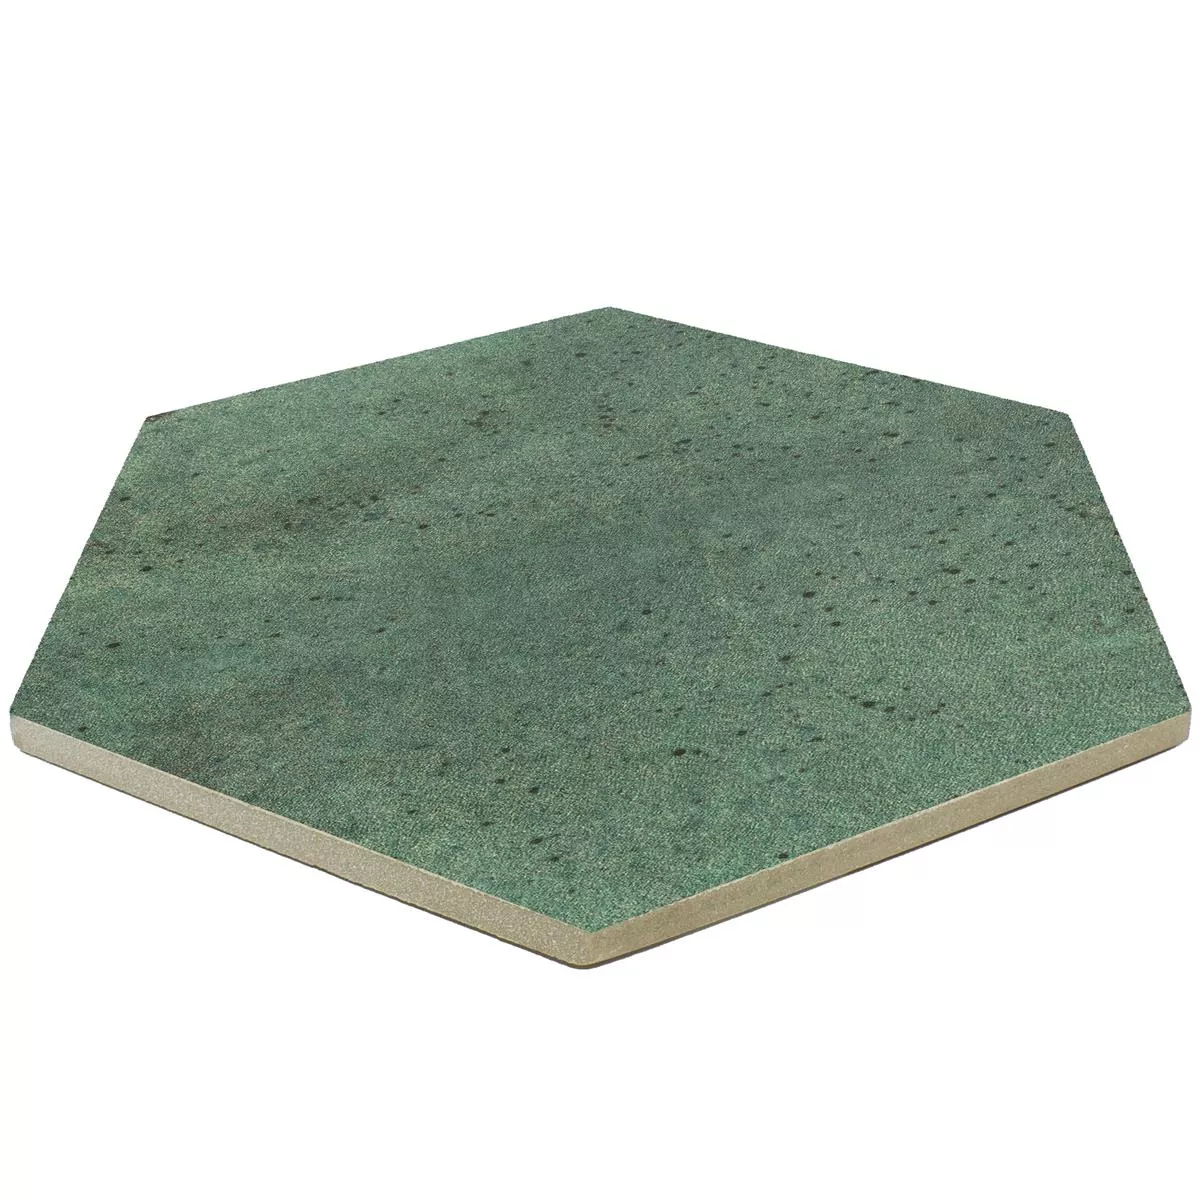 Muestra Pavimentos Arosa Mate Hexagonales Verde Esmeralda 17,3x15cm